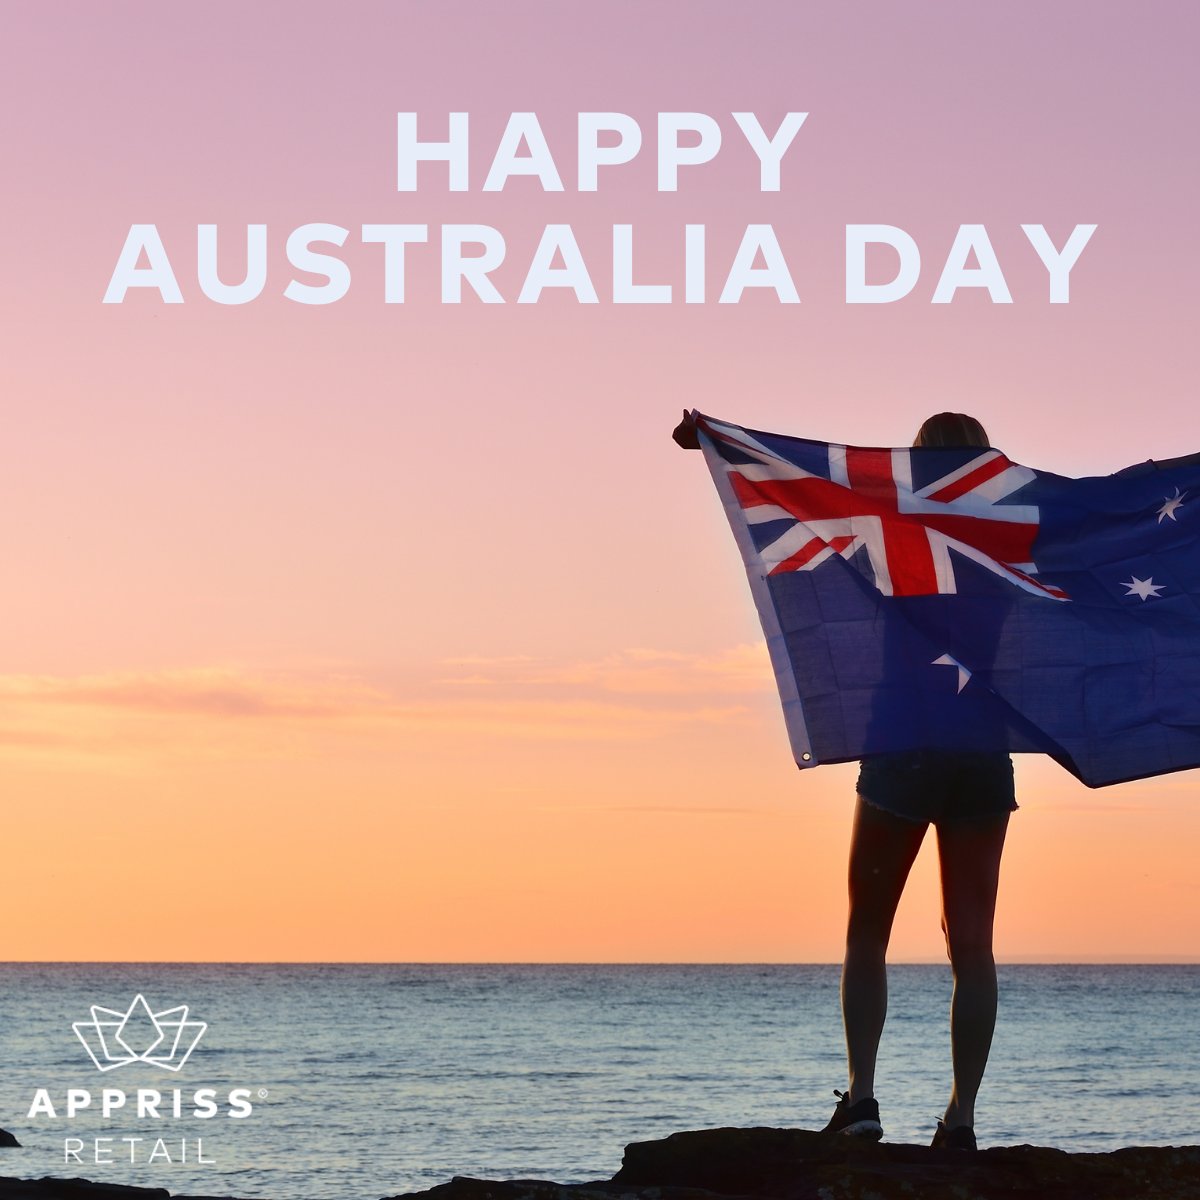 Wishing you a day full of fun and cheer! #HappyAustraliaDay